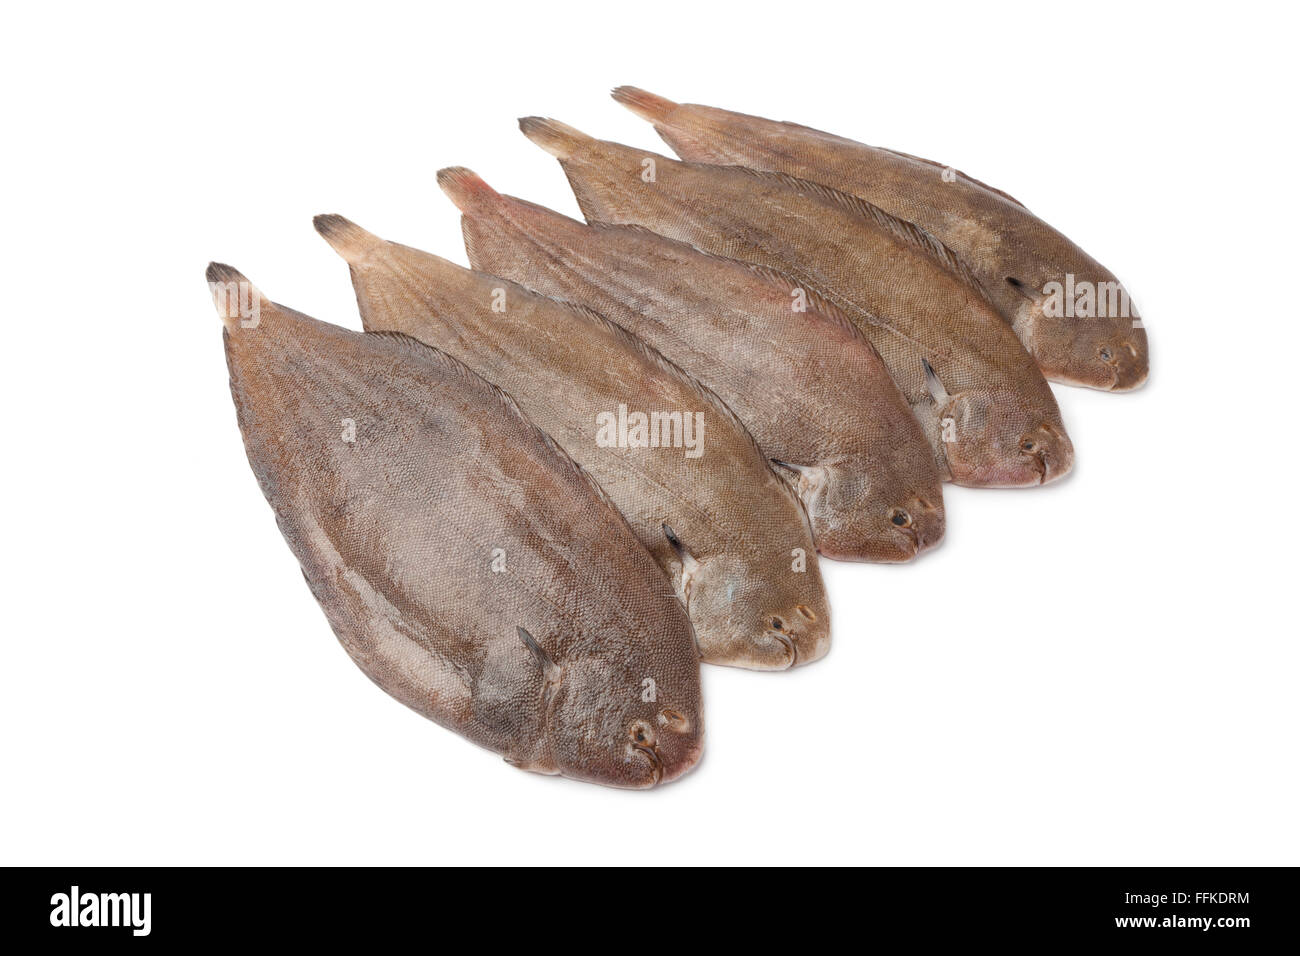 Fresh sole fishes on white background Stock Photo